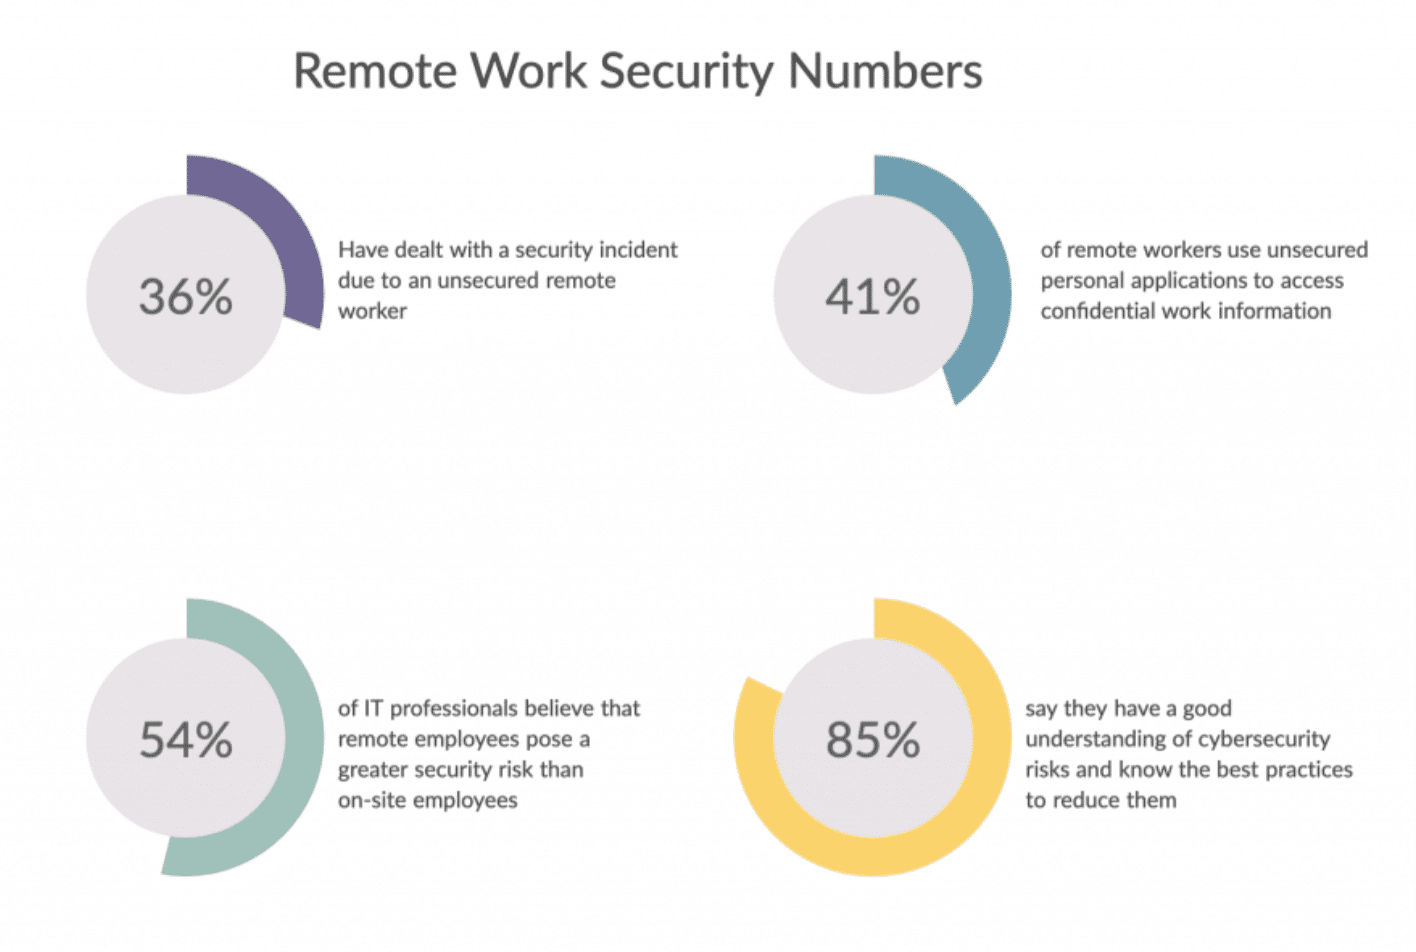 Remote work security numbers